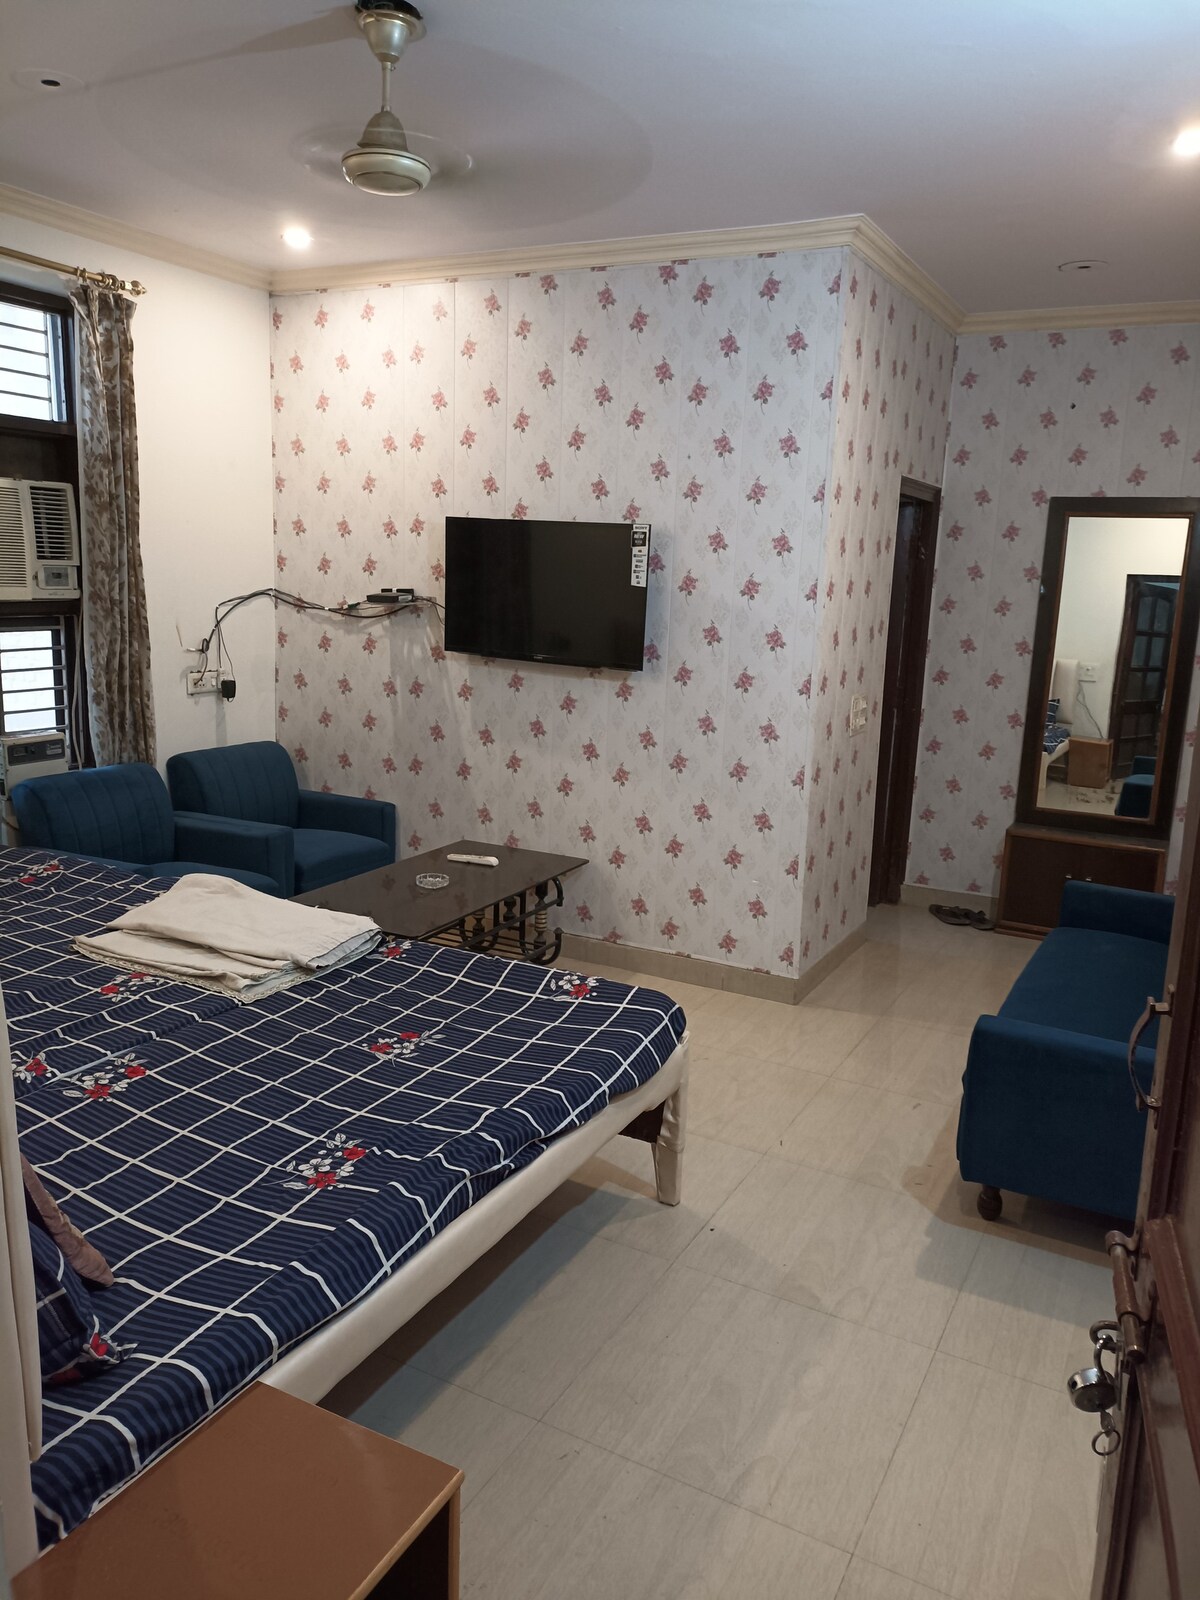 Hotel Shri Ram Residency, Sonipat